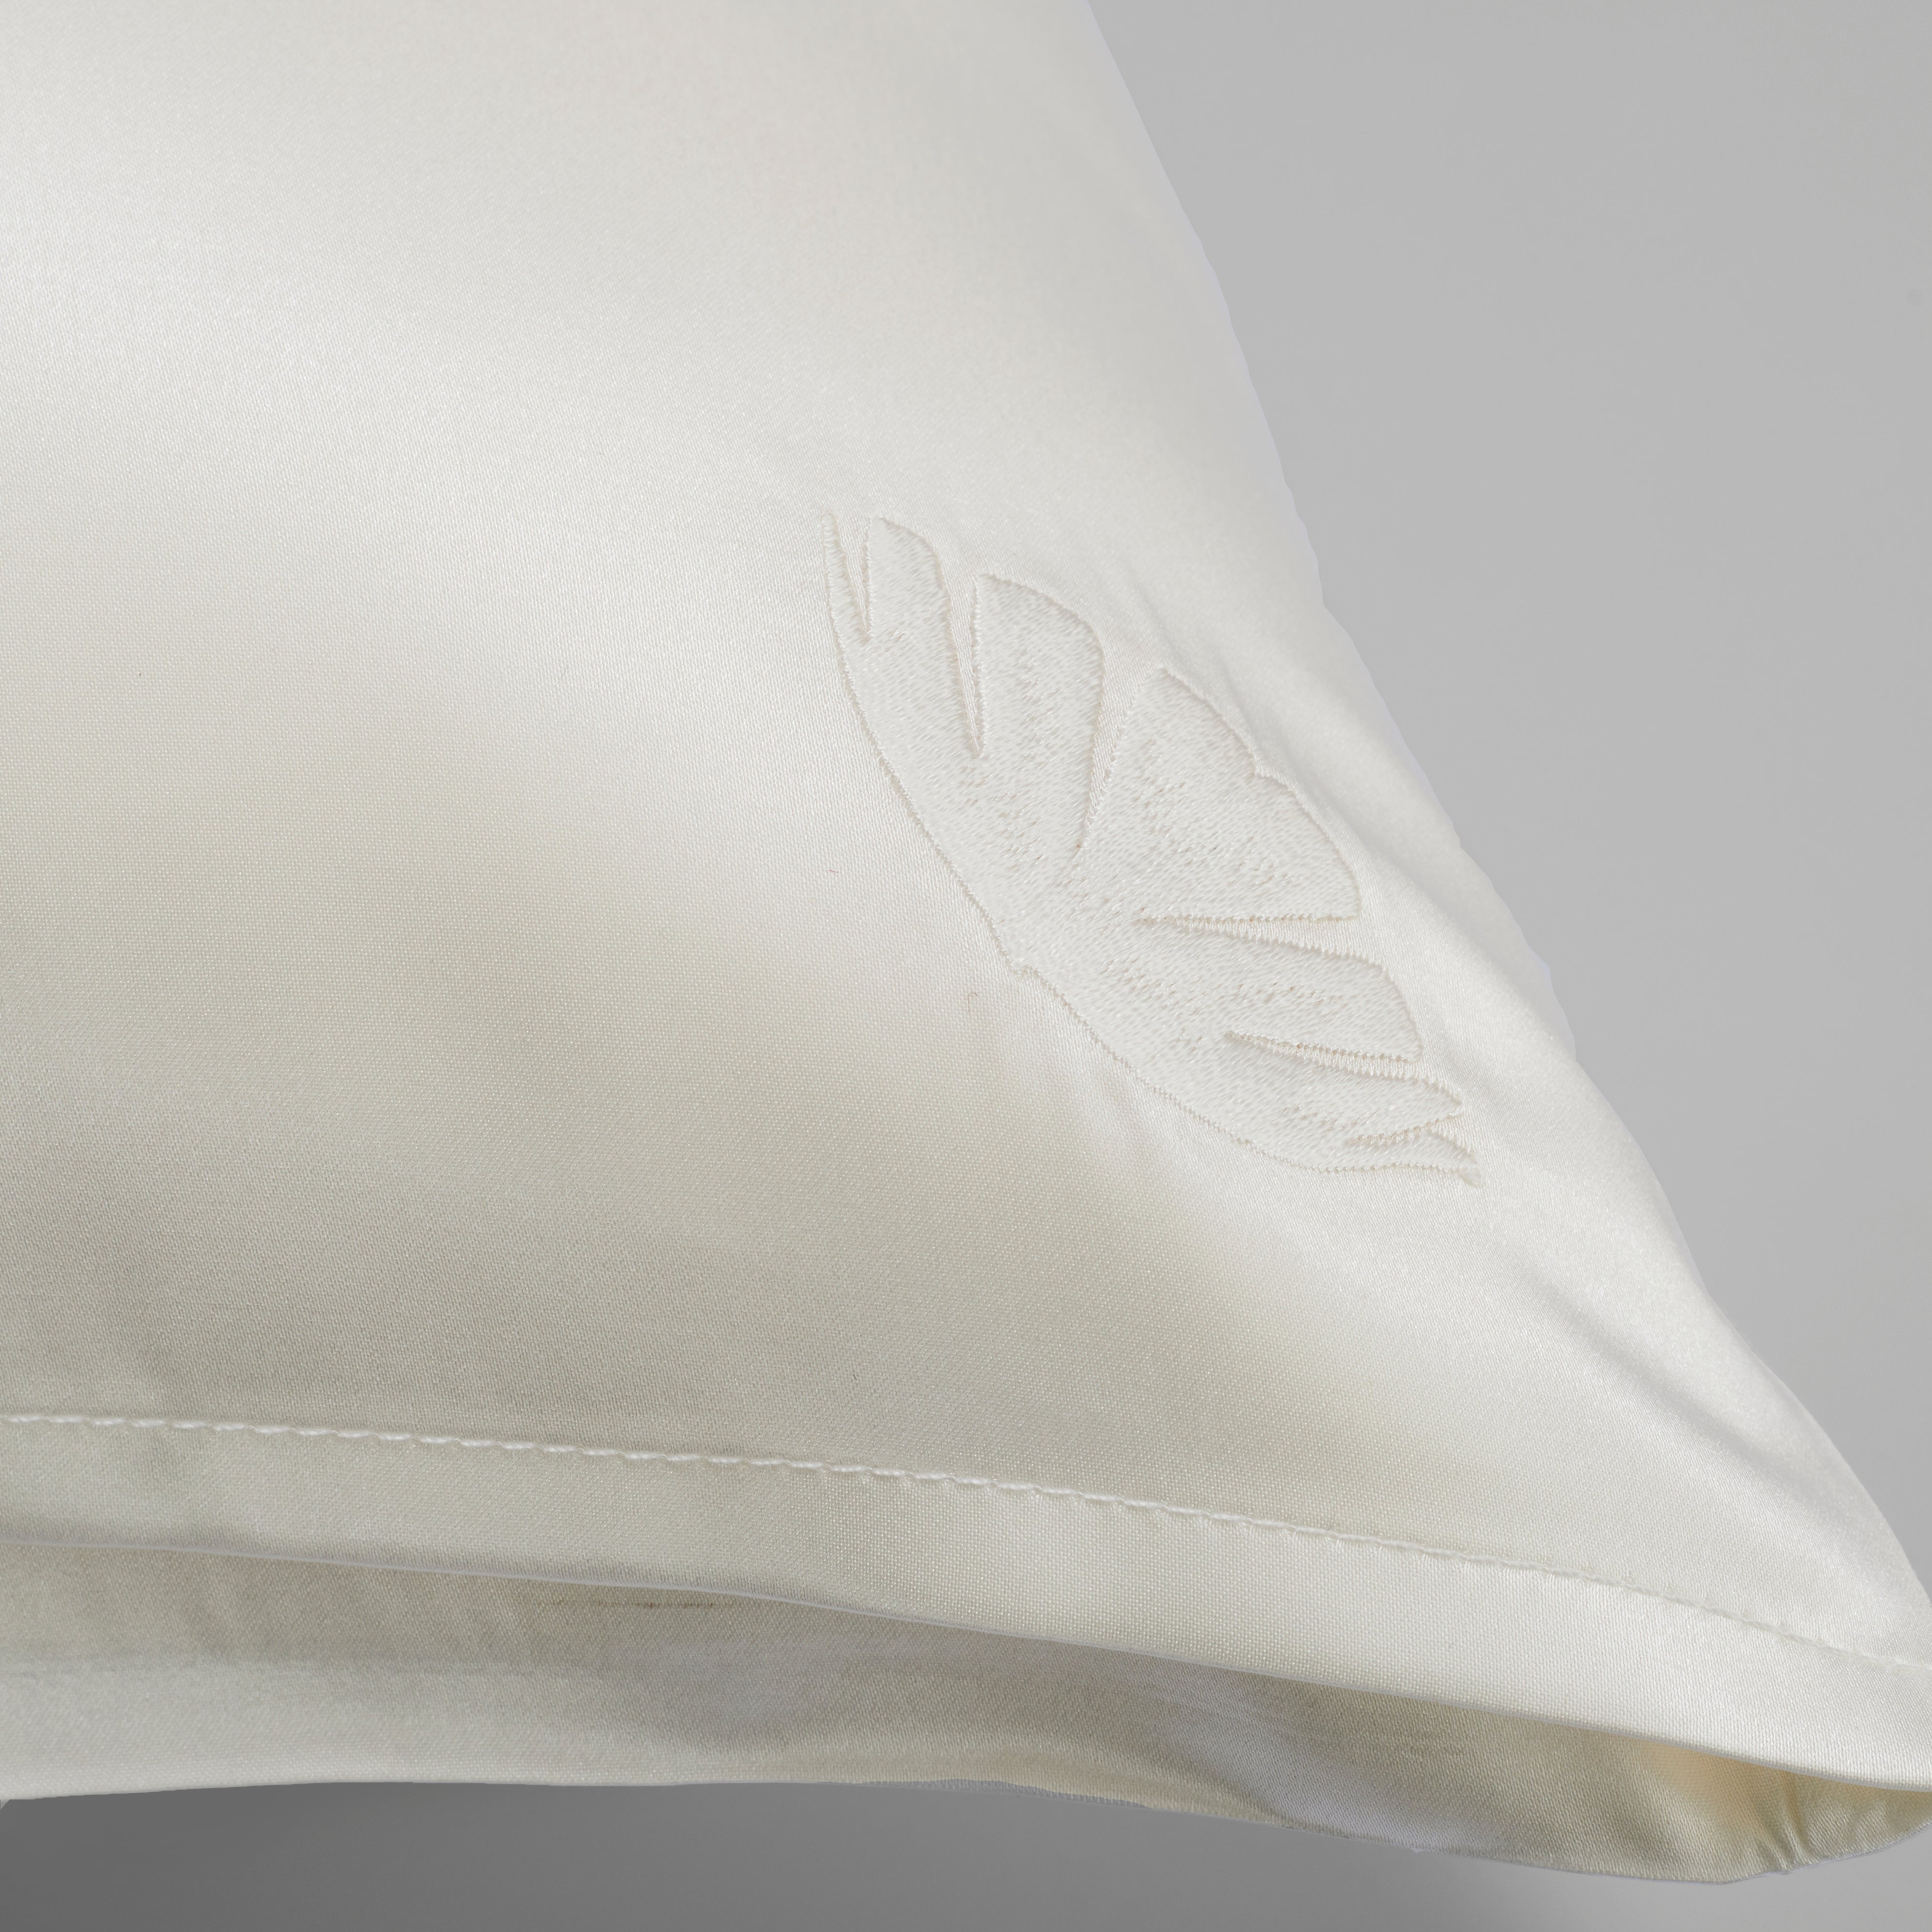 Is silk pillowcase worth it?